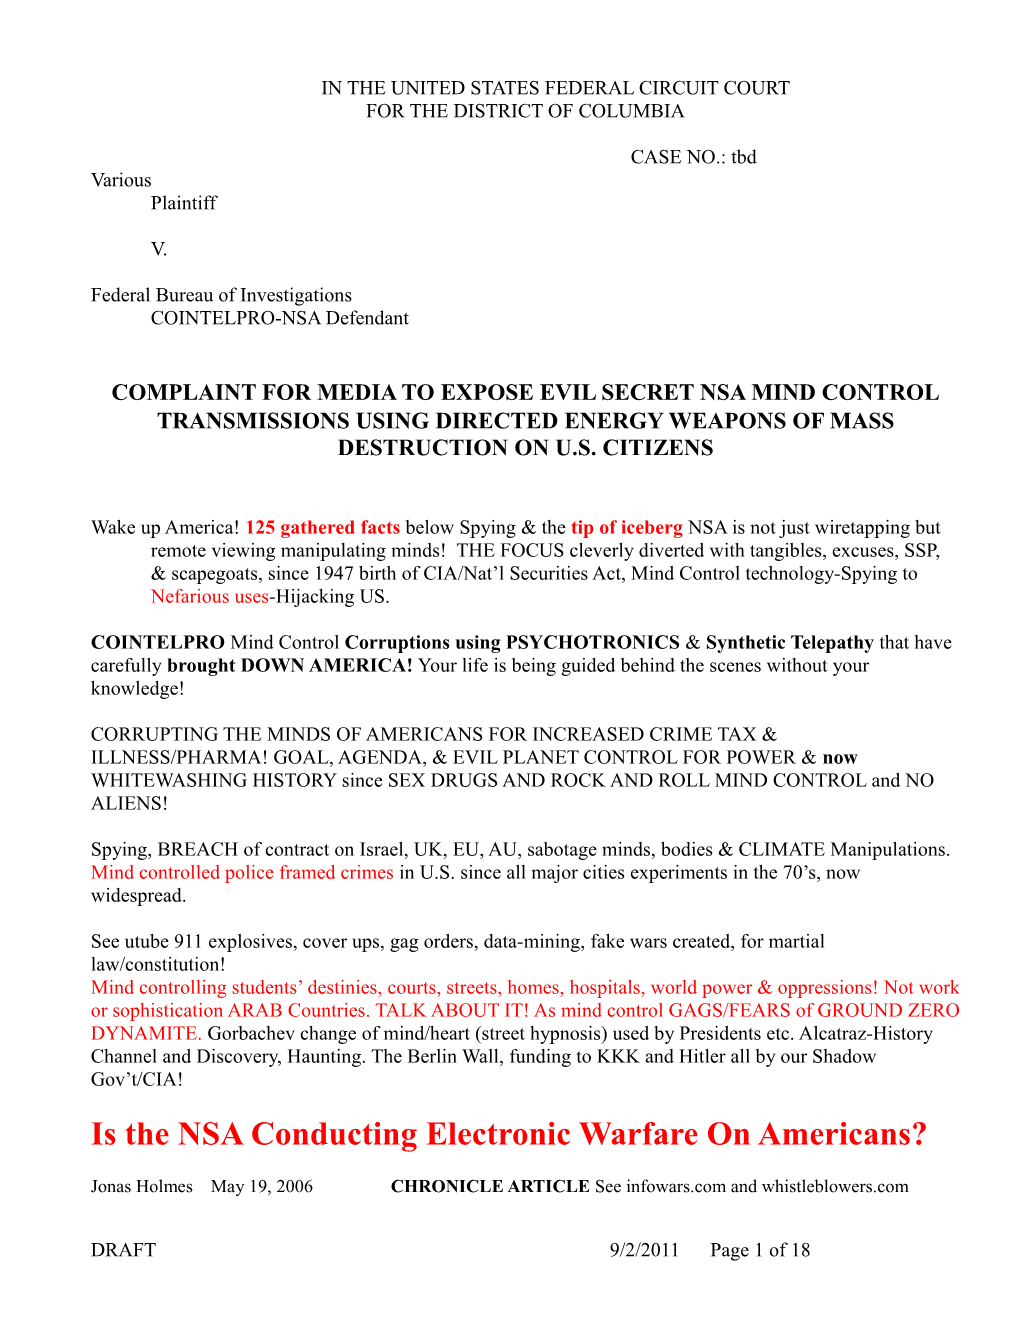 Complaint for Media to Expose Evil Secret of NSA